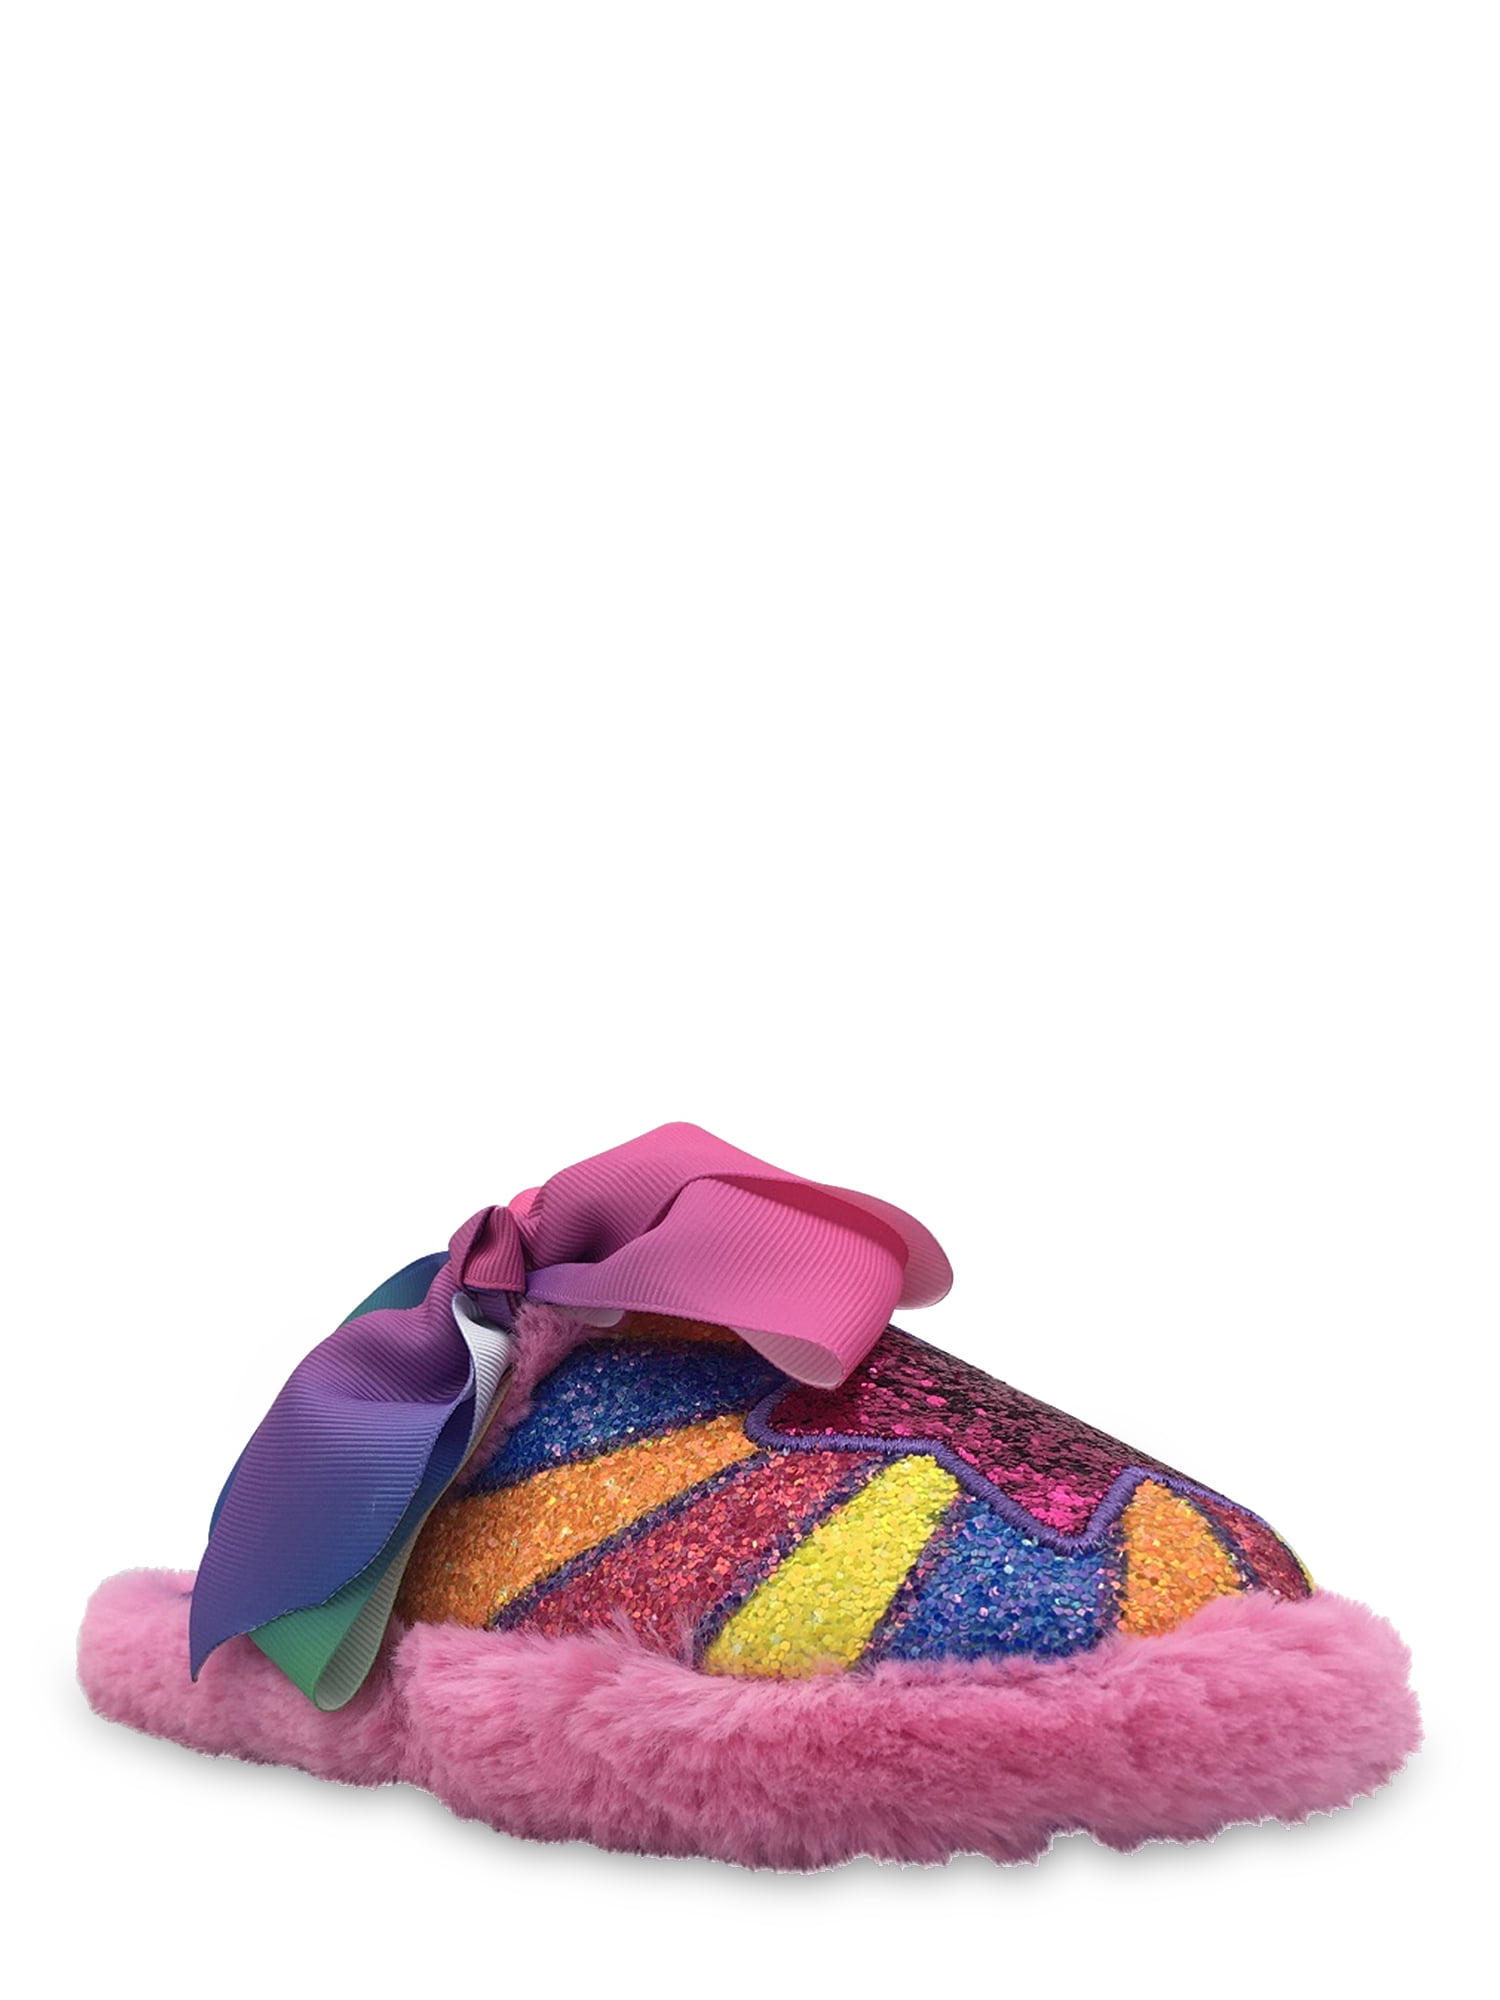 NEW Jojo Siwa Girls Star Glitter Swirl Scuff Character Slippers House Shoes 